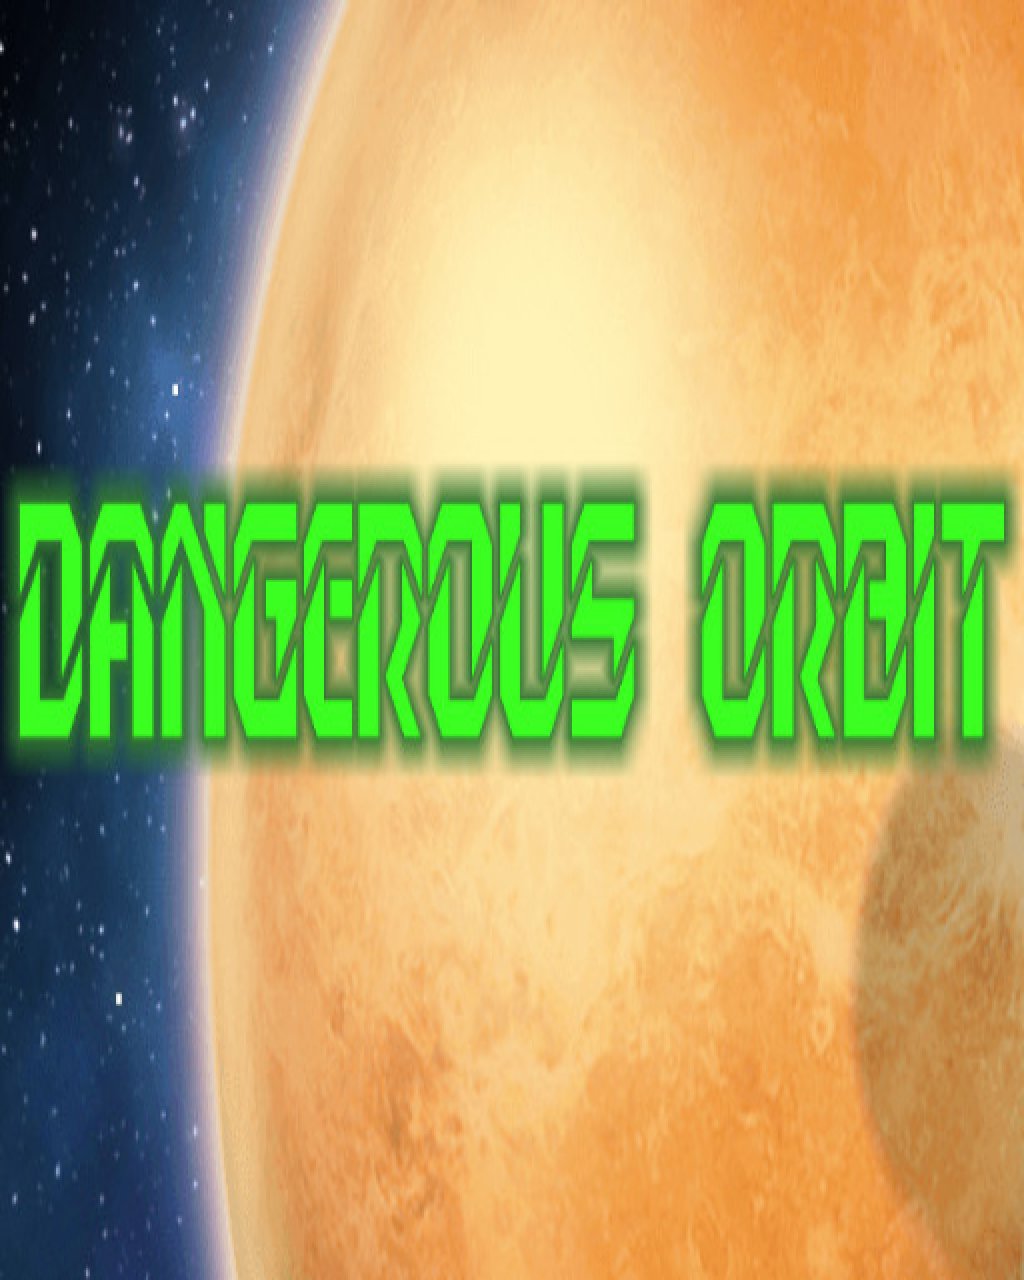 Dangerous Orbit